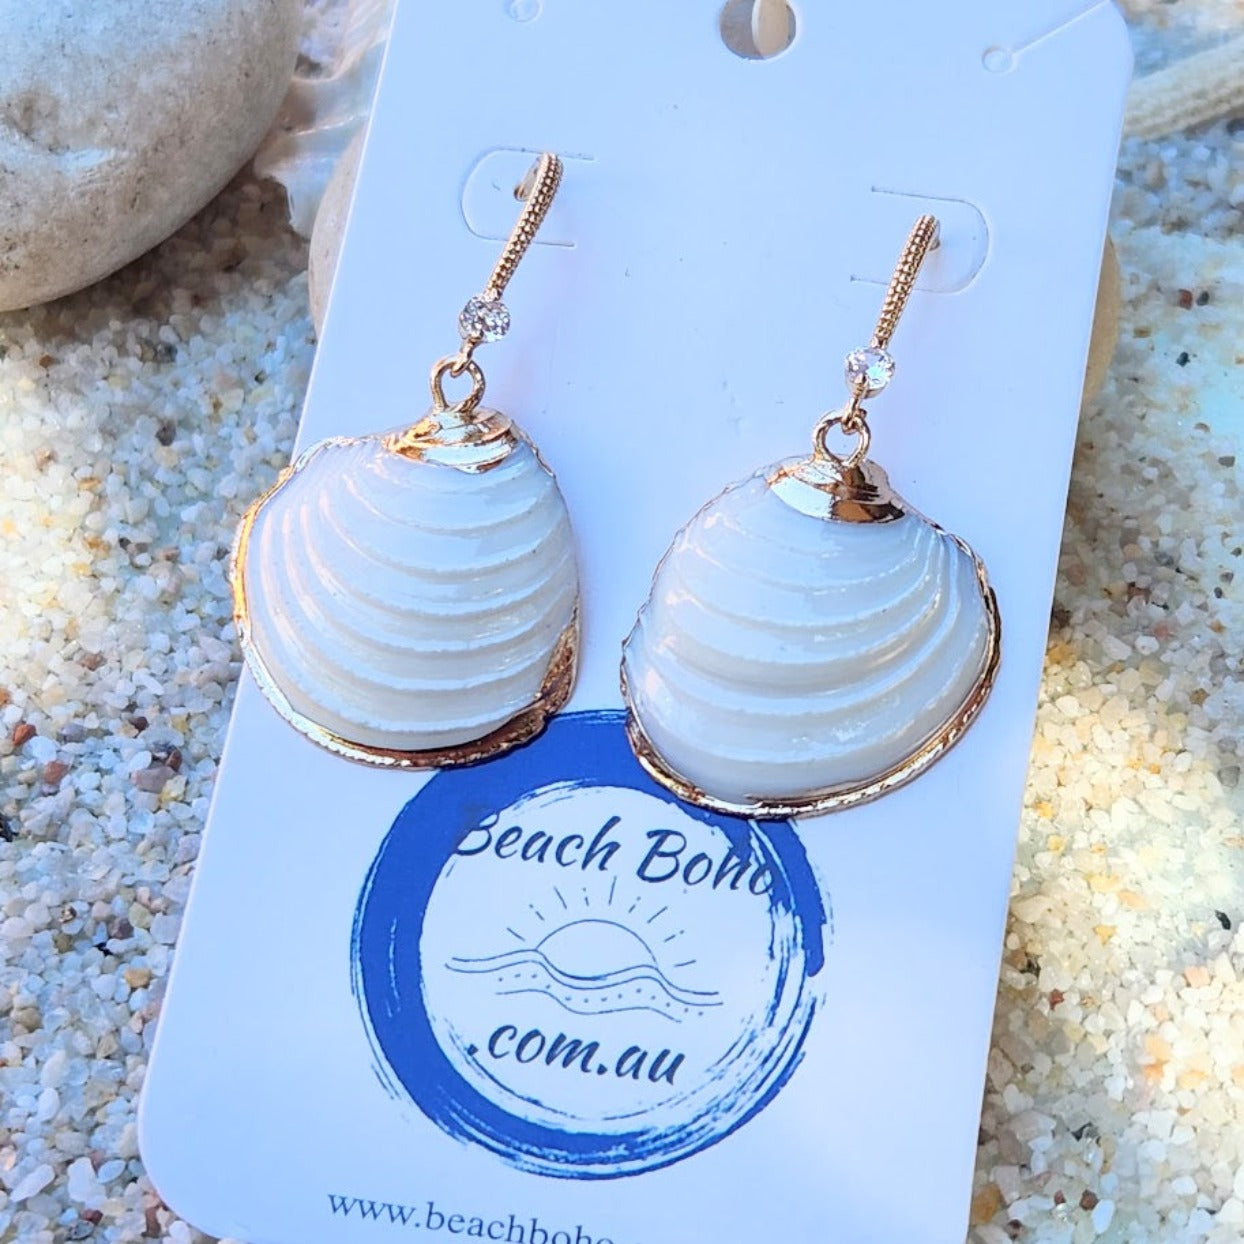 SEA SHELLS - GOLD HOOK CUBIC ZIRONIA EARRINGS - Premium earrings from www.beachboho.com.au - Just $40! Shop now at www.beachboho.com.au